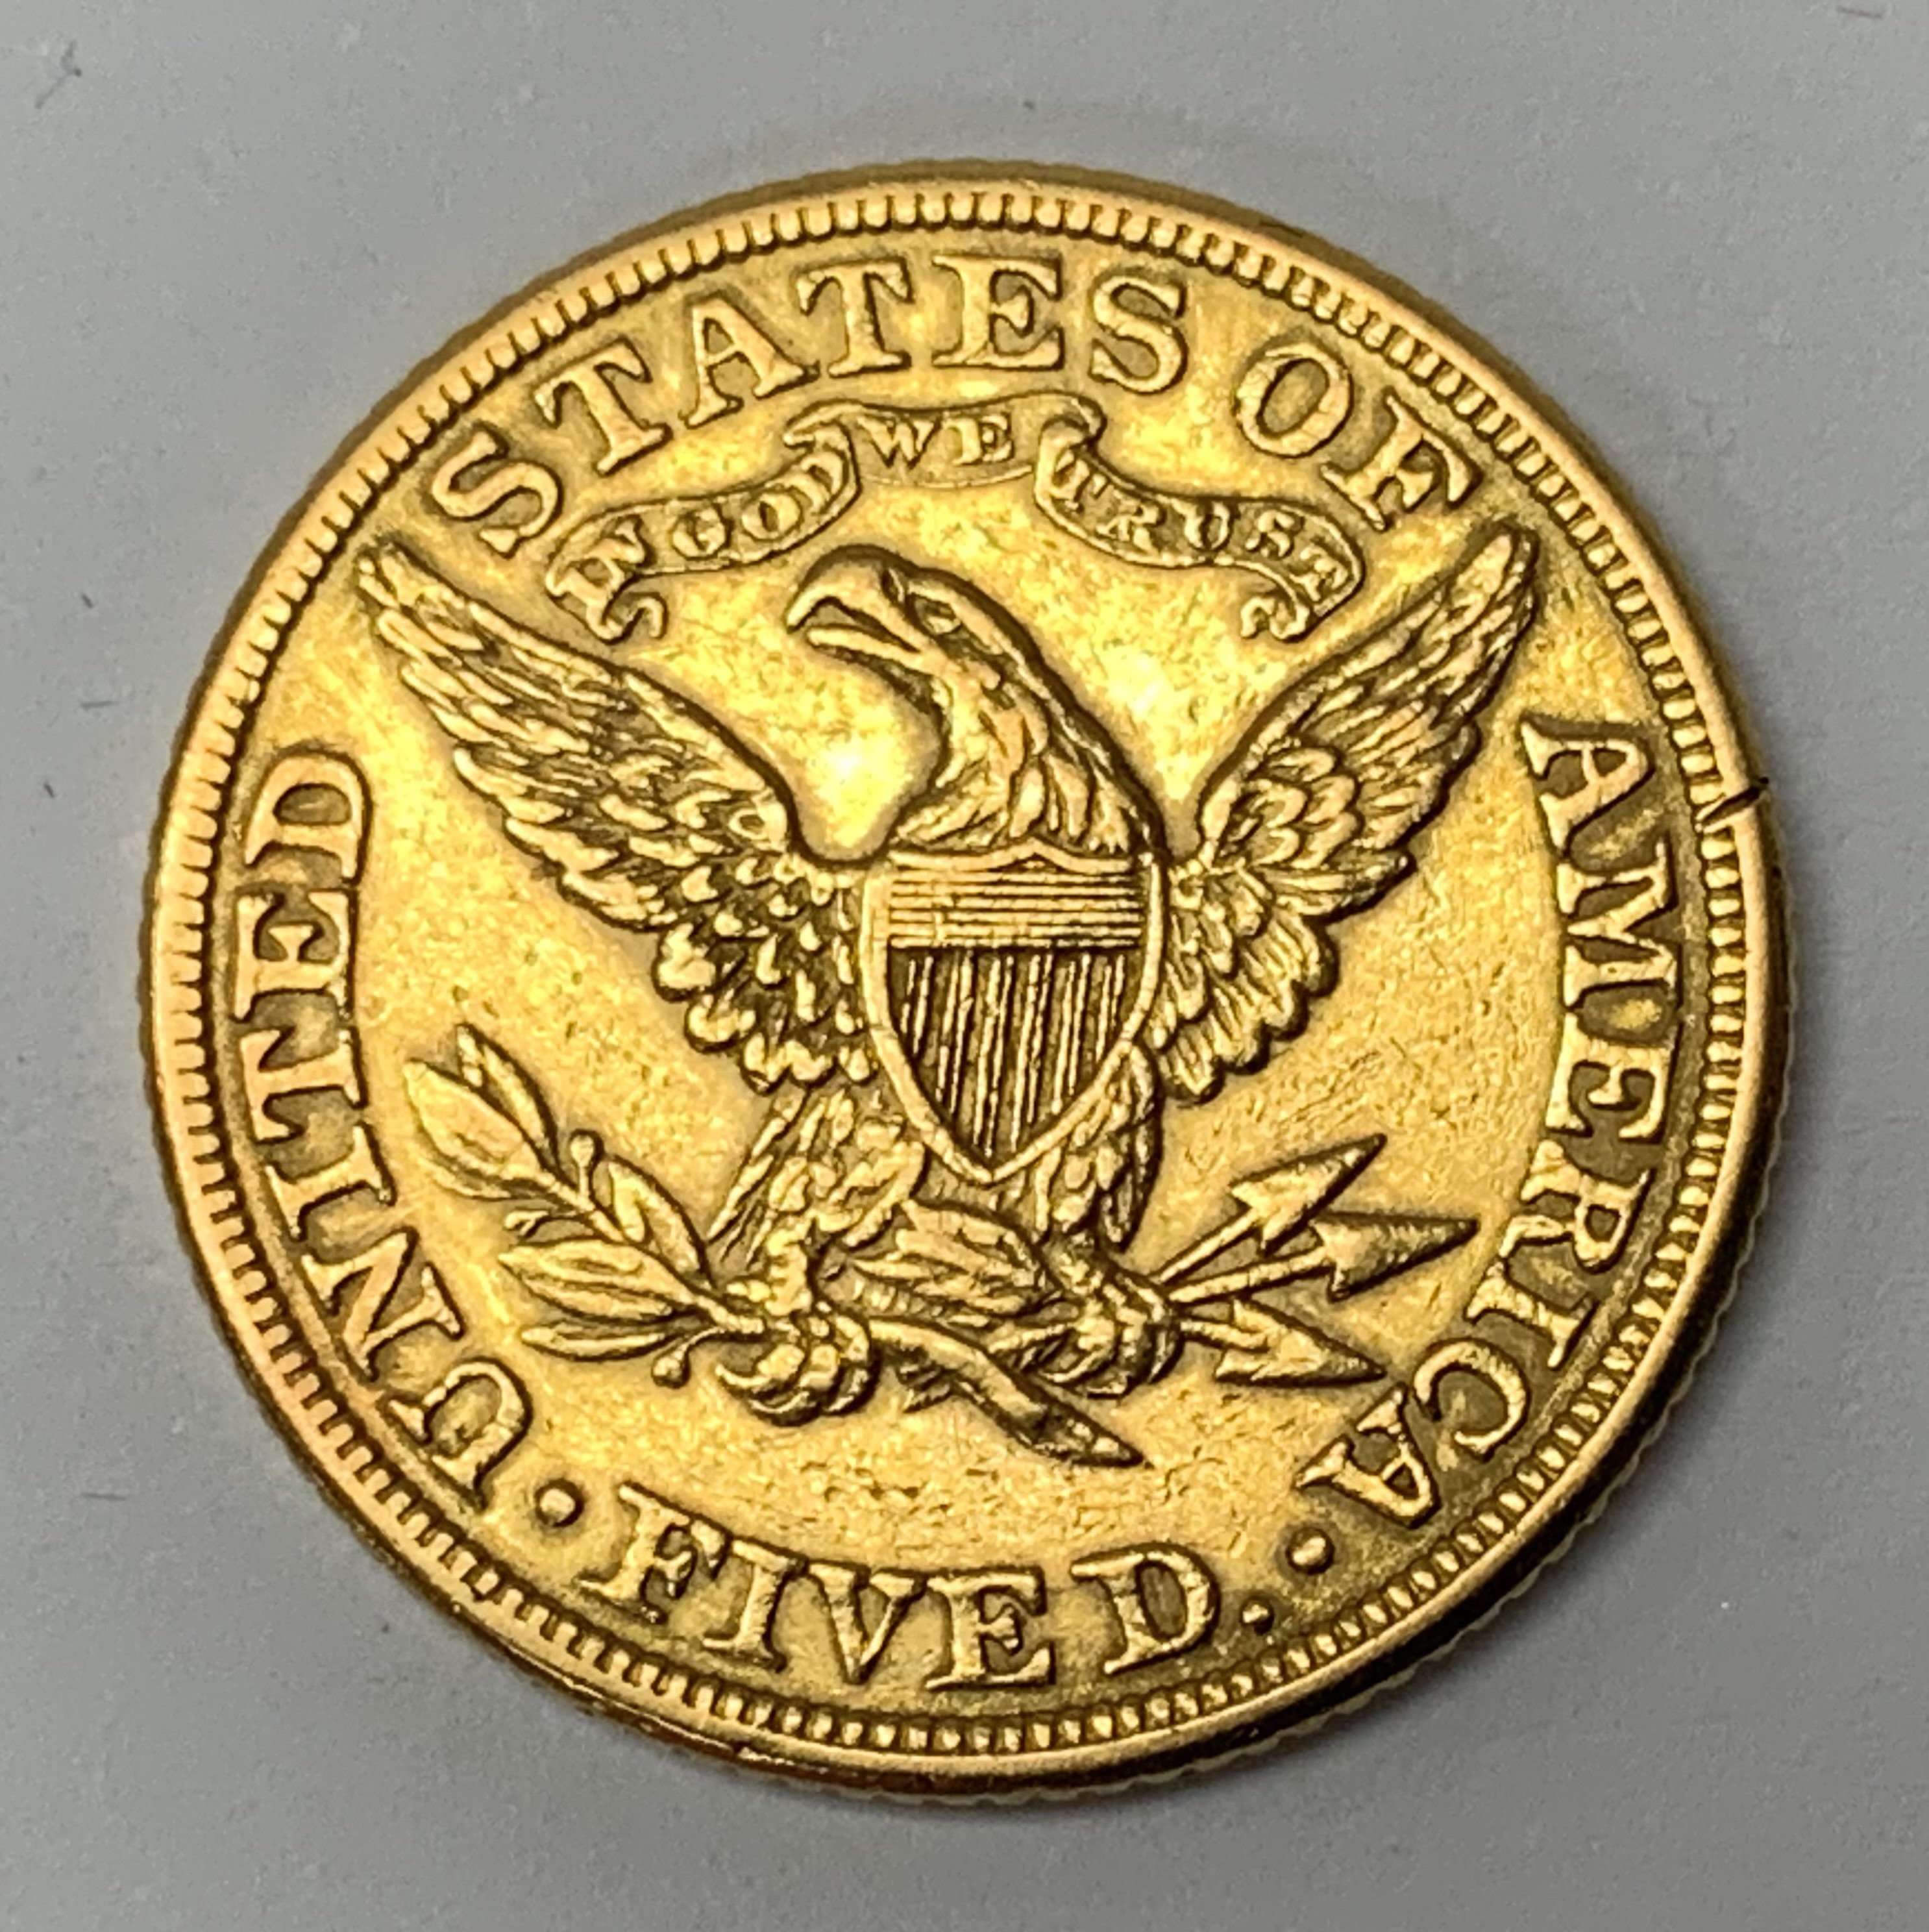 1882 $5 Liberty coin (coronet head) facing left, s - Image 2 of 2